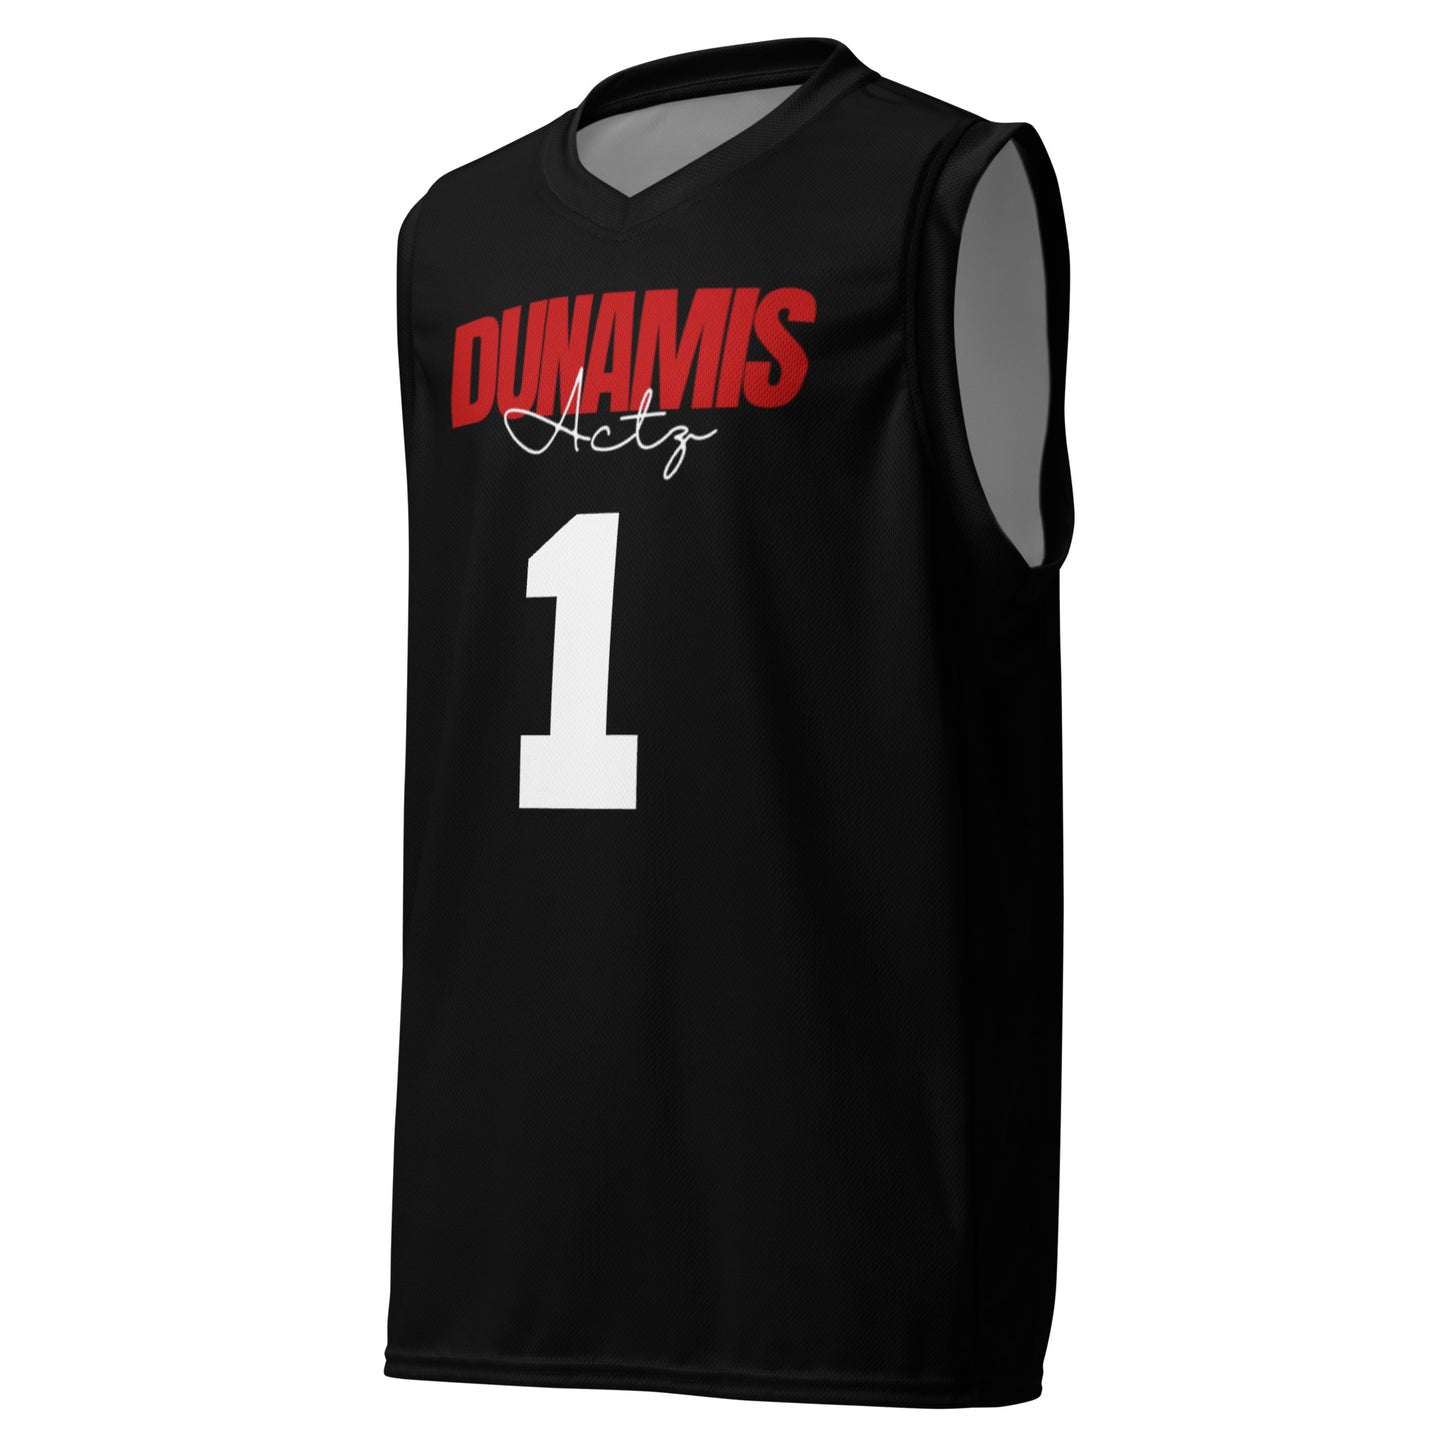 Dunamis Actz Recycled Unisex Basketball Jersey